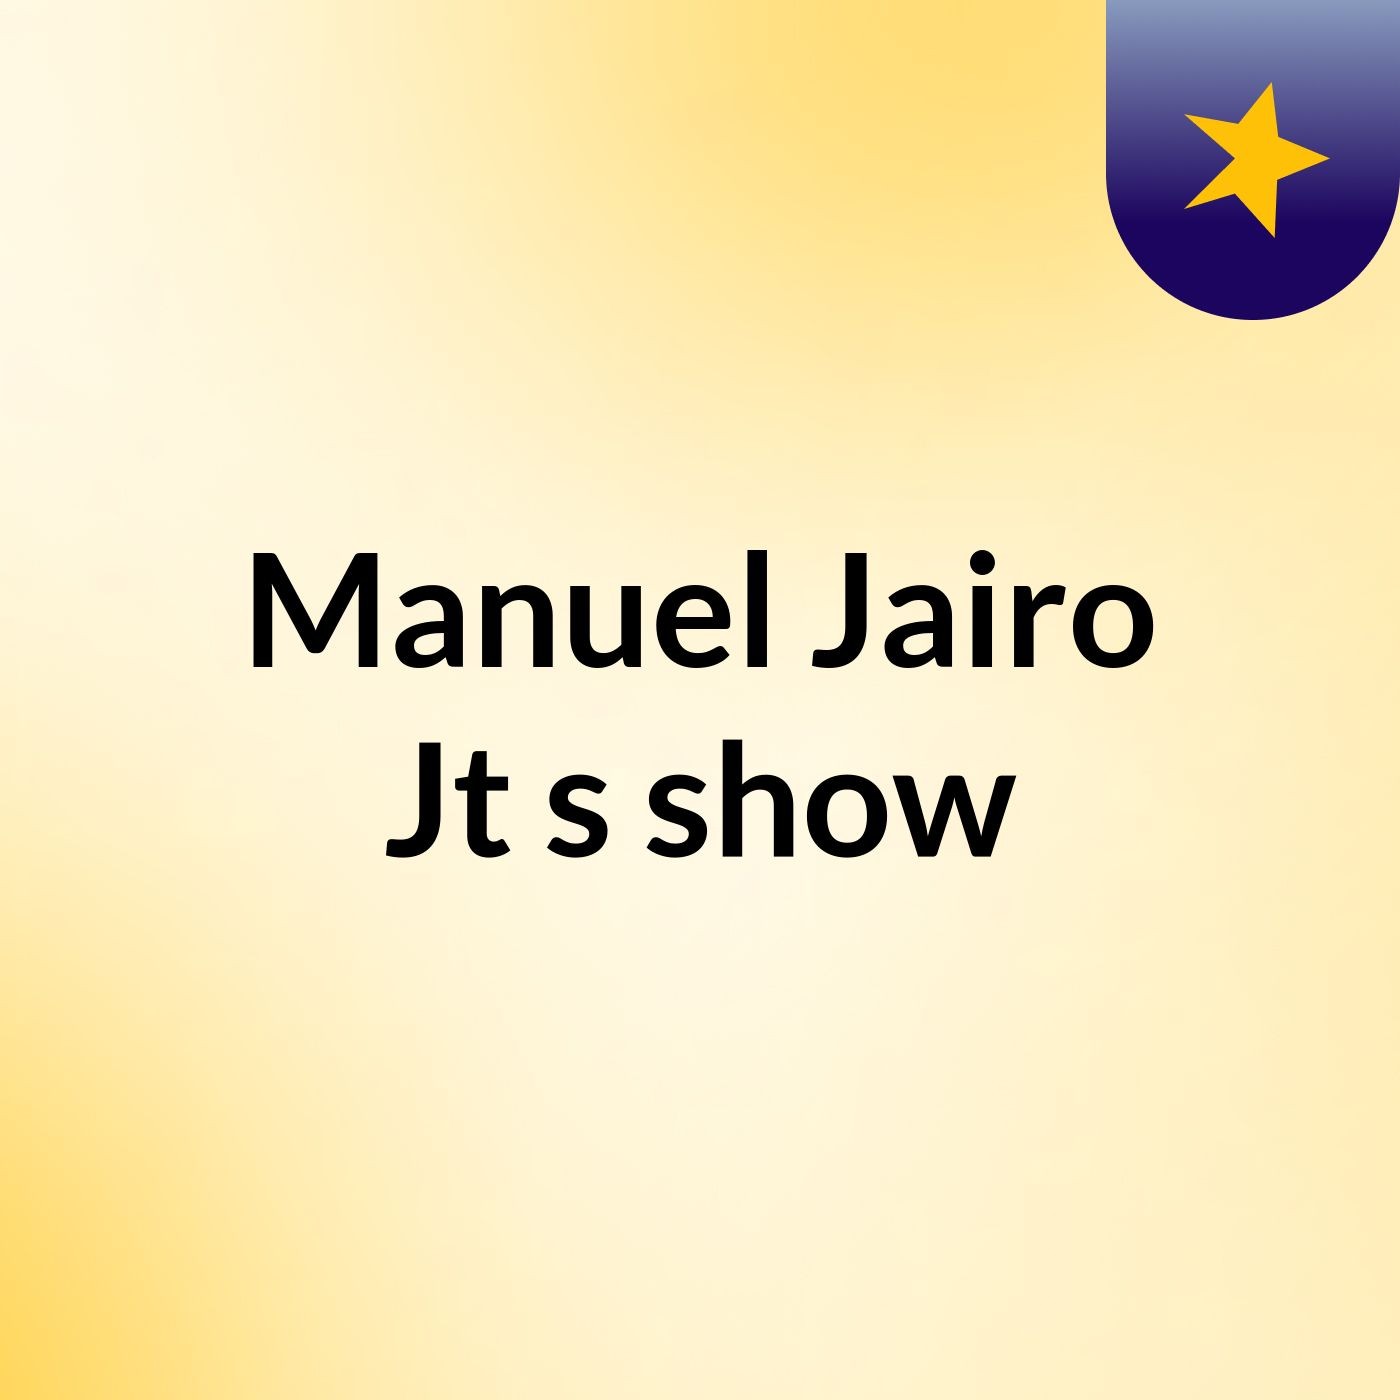 Manuel Jairo Jt's show